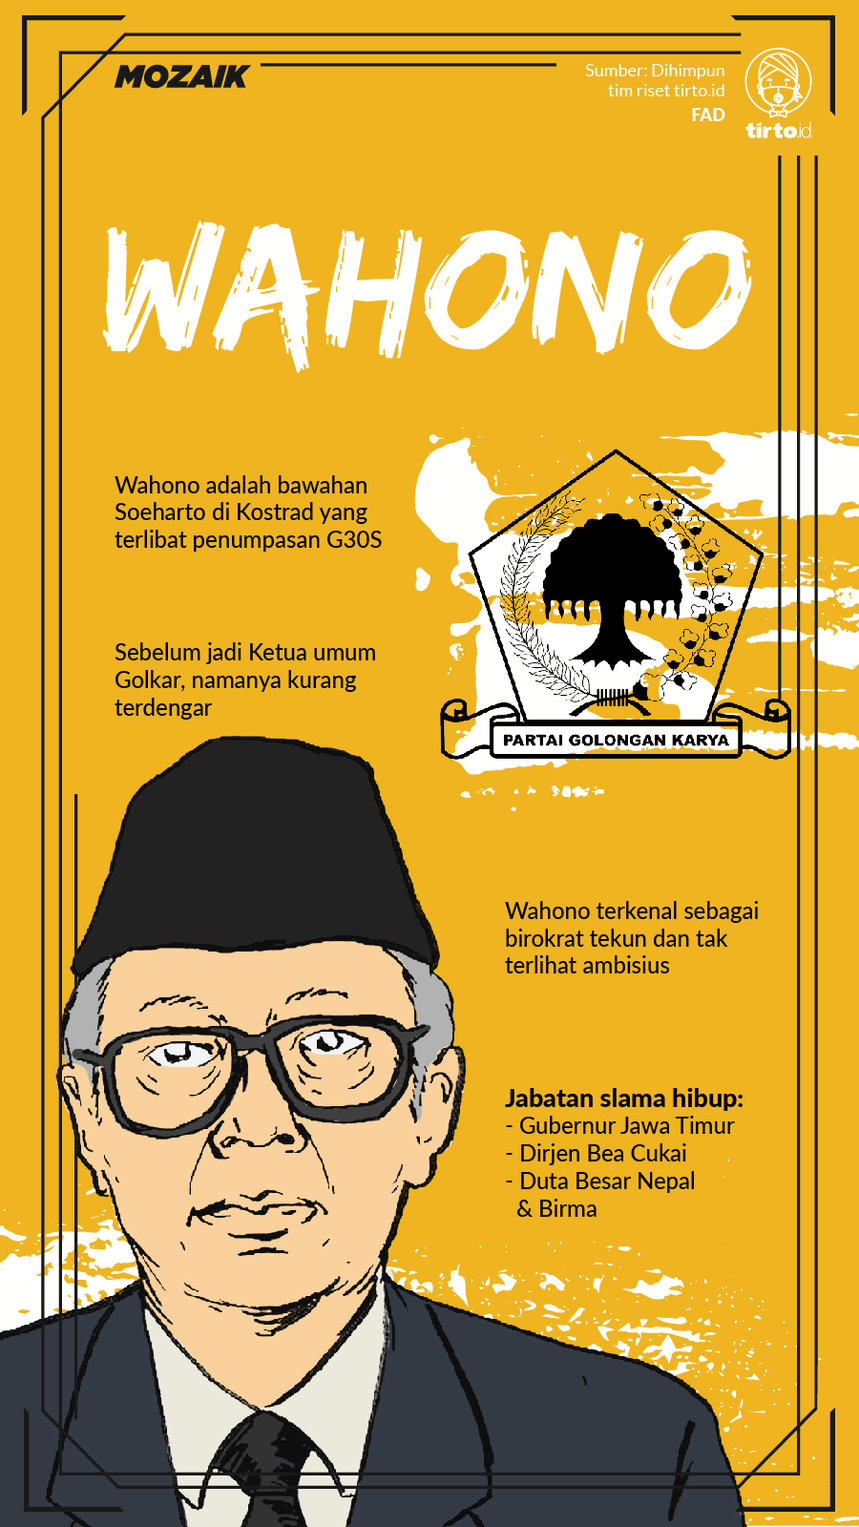 Infografik Mozaik Wahono